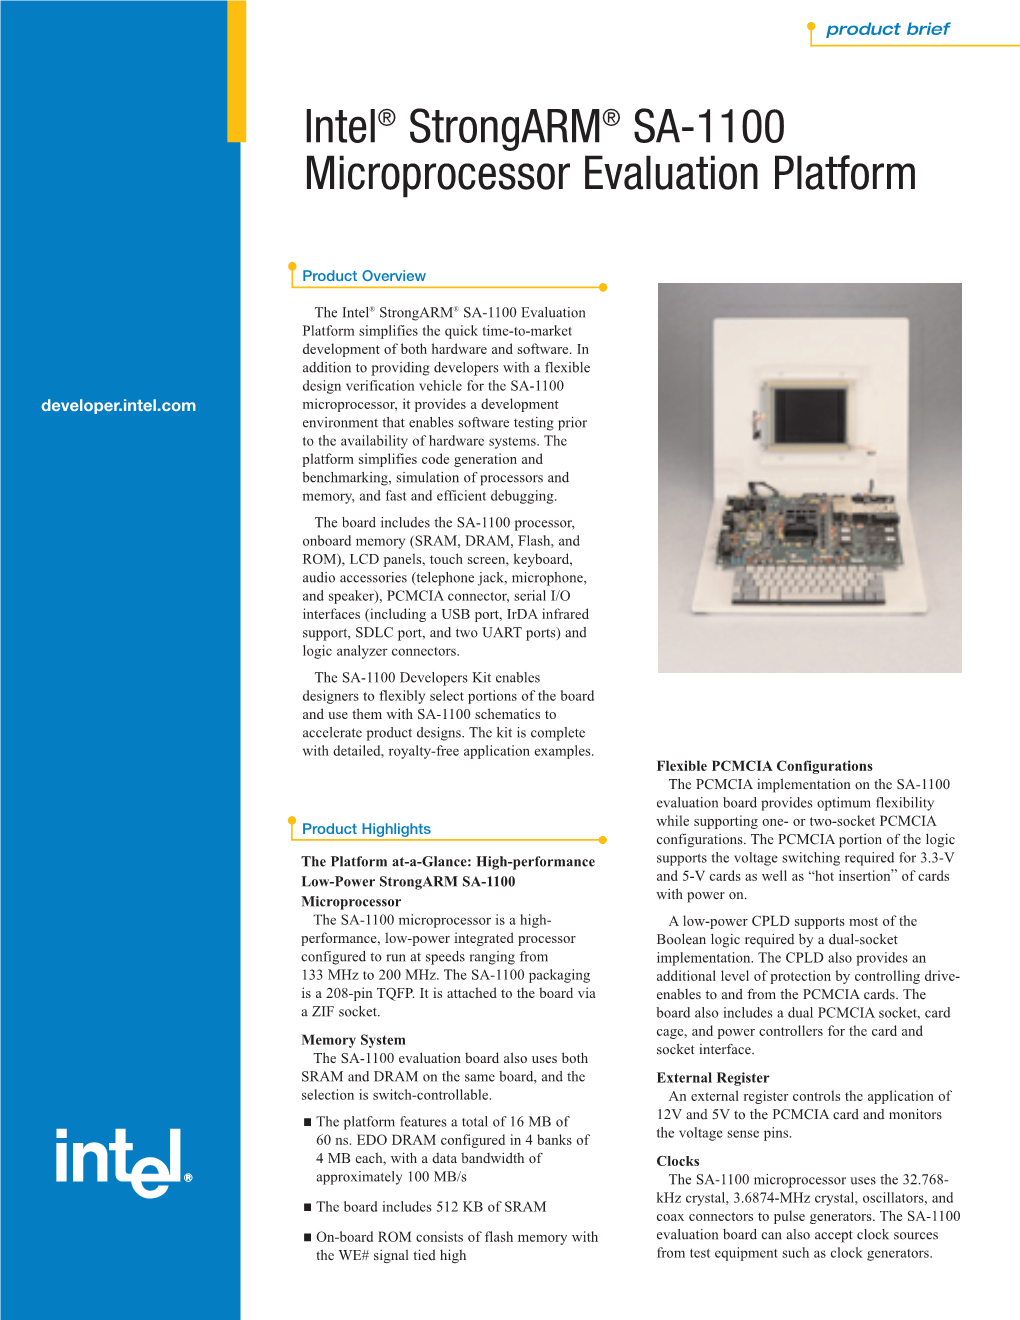 Intel® Strongarm® SA-1100 Microprocessor Evaluation Platform